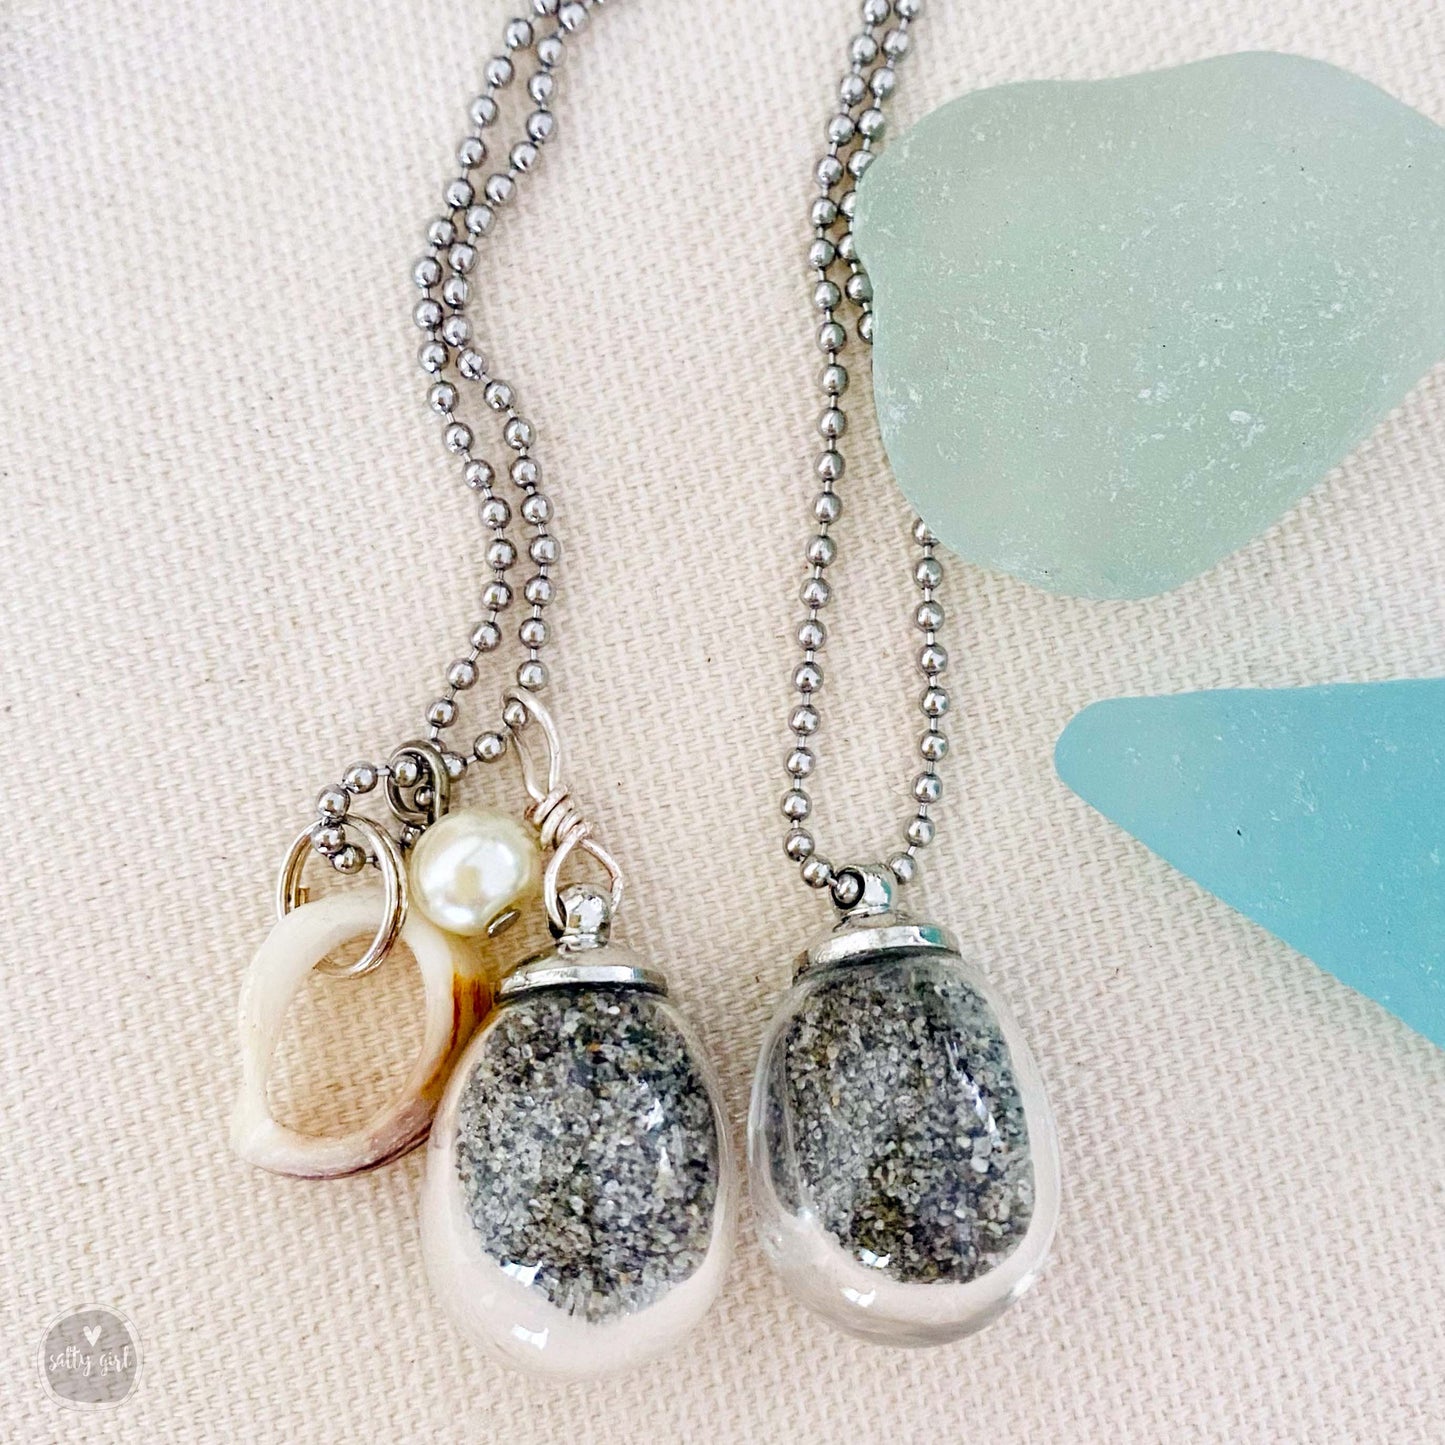 Beach Sand Jewelry - Maine Beach Sand Necklace & Earrings